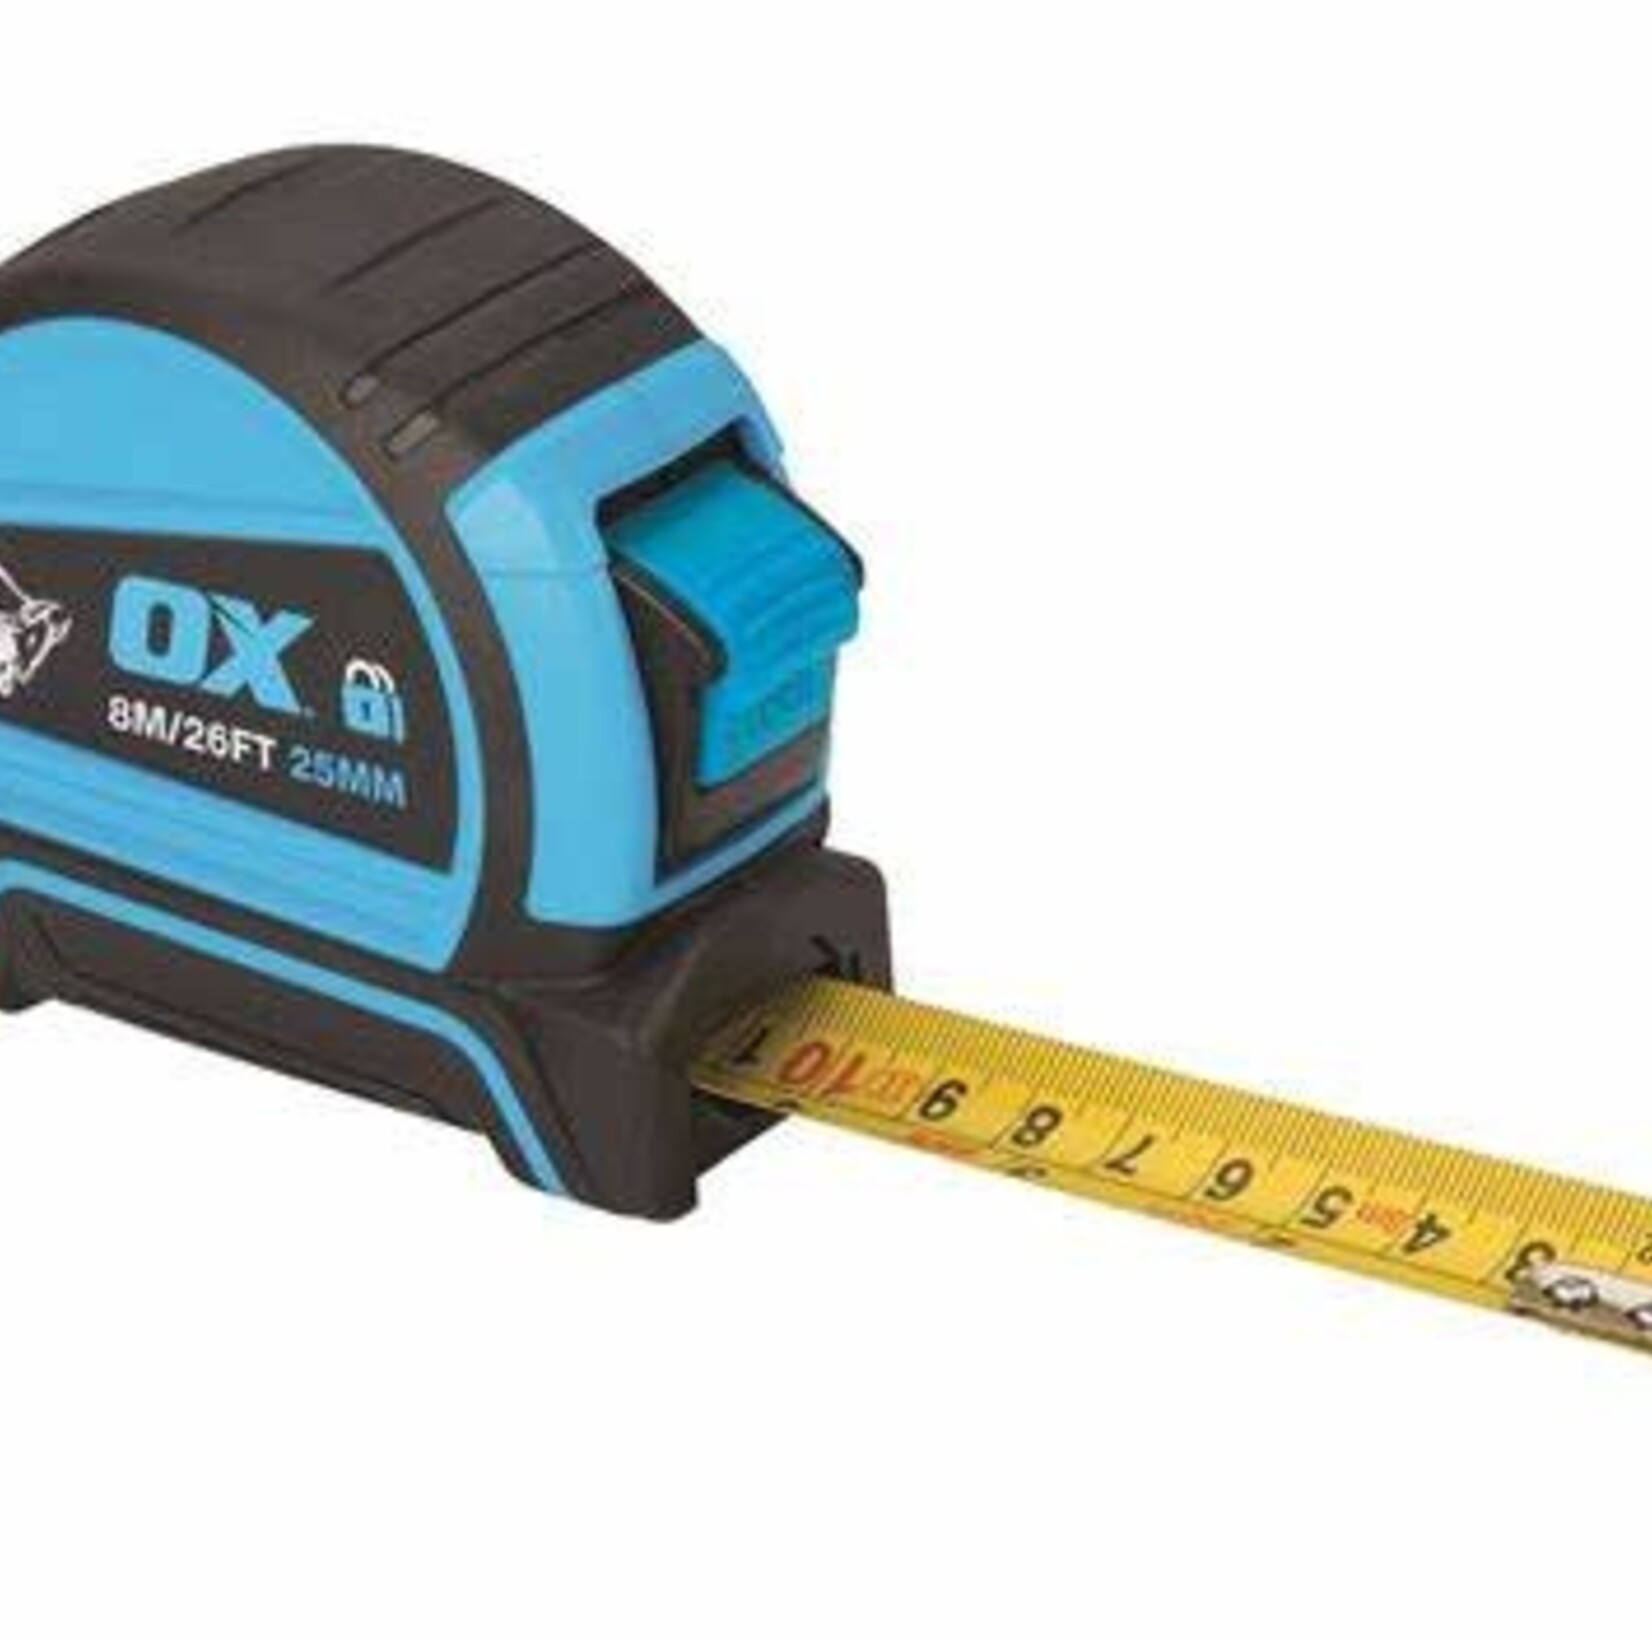 Ox Tools OX Twin Pk Double Lock Tape Measure – 8m/5m